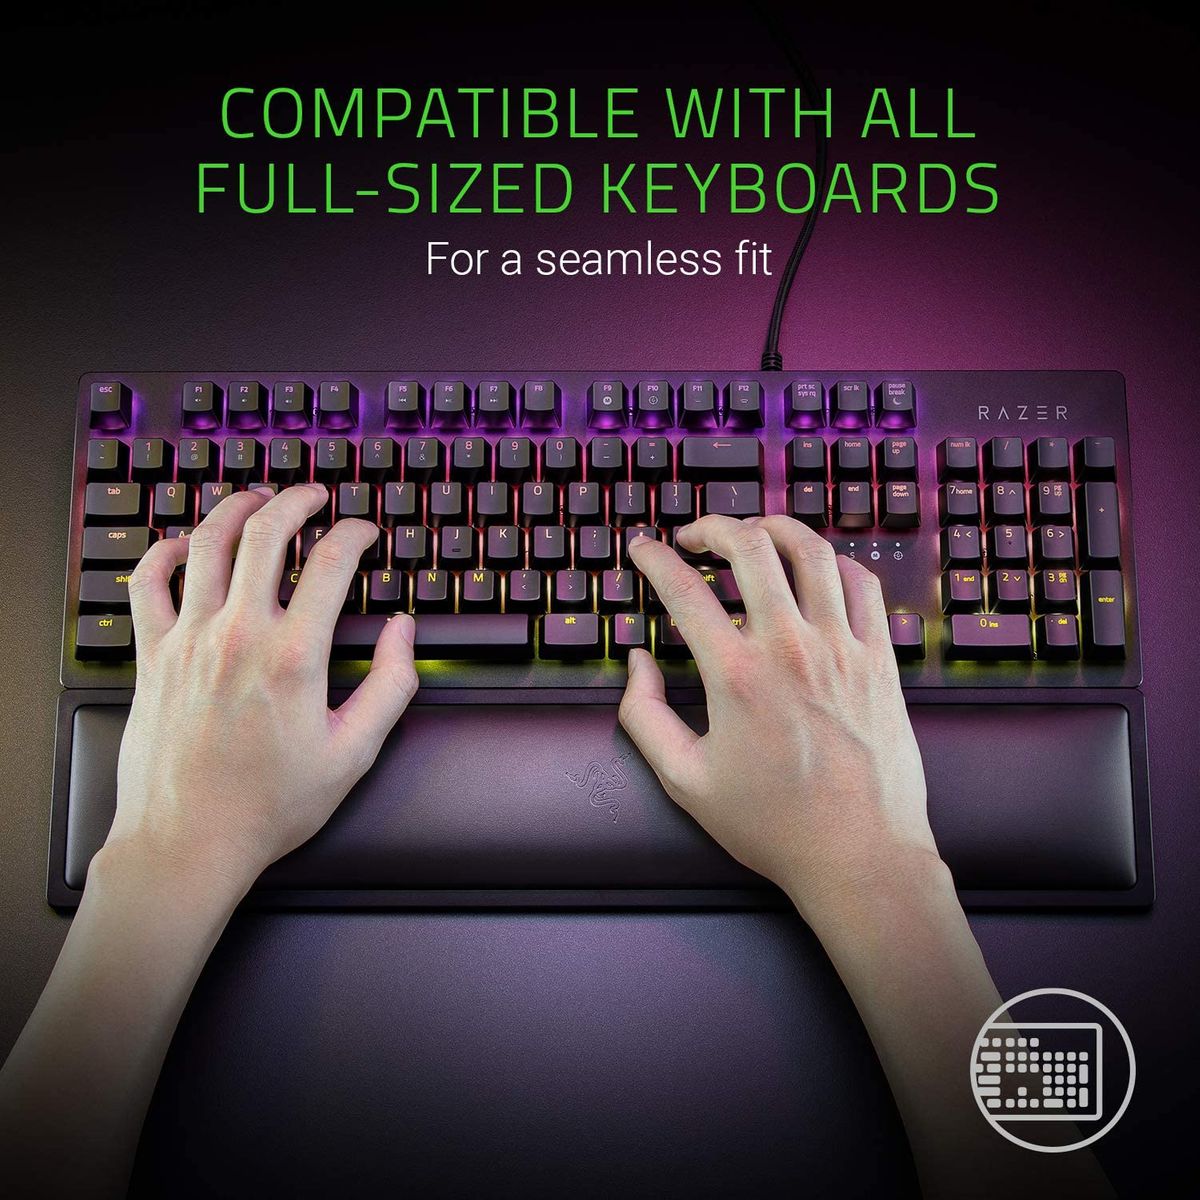 RAZER Ergonomic Wrist Rest for Full-Sized Keyboards Handgelenkstütze 445x90x26mm